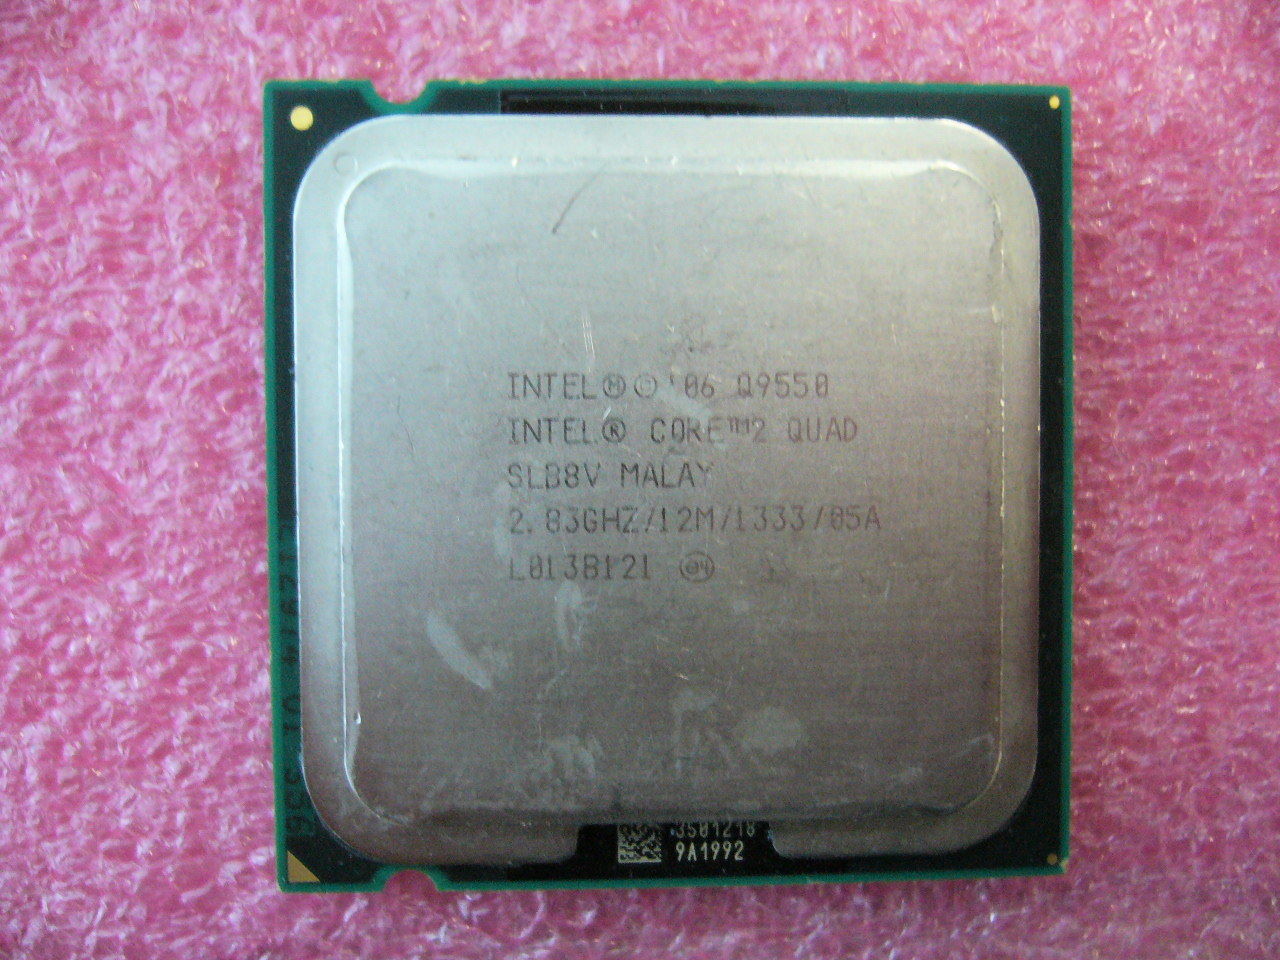 QTY 1x INTEL Quad Cores Q9550 CPU 2.83GHz/12MB/1333Mhz LGA775 SLB8V SLAWQ